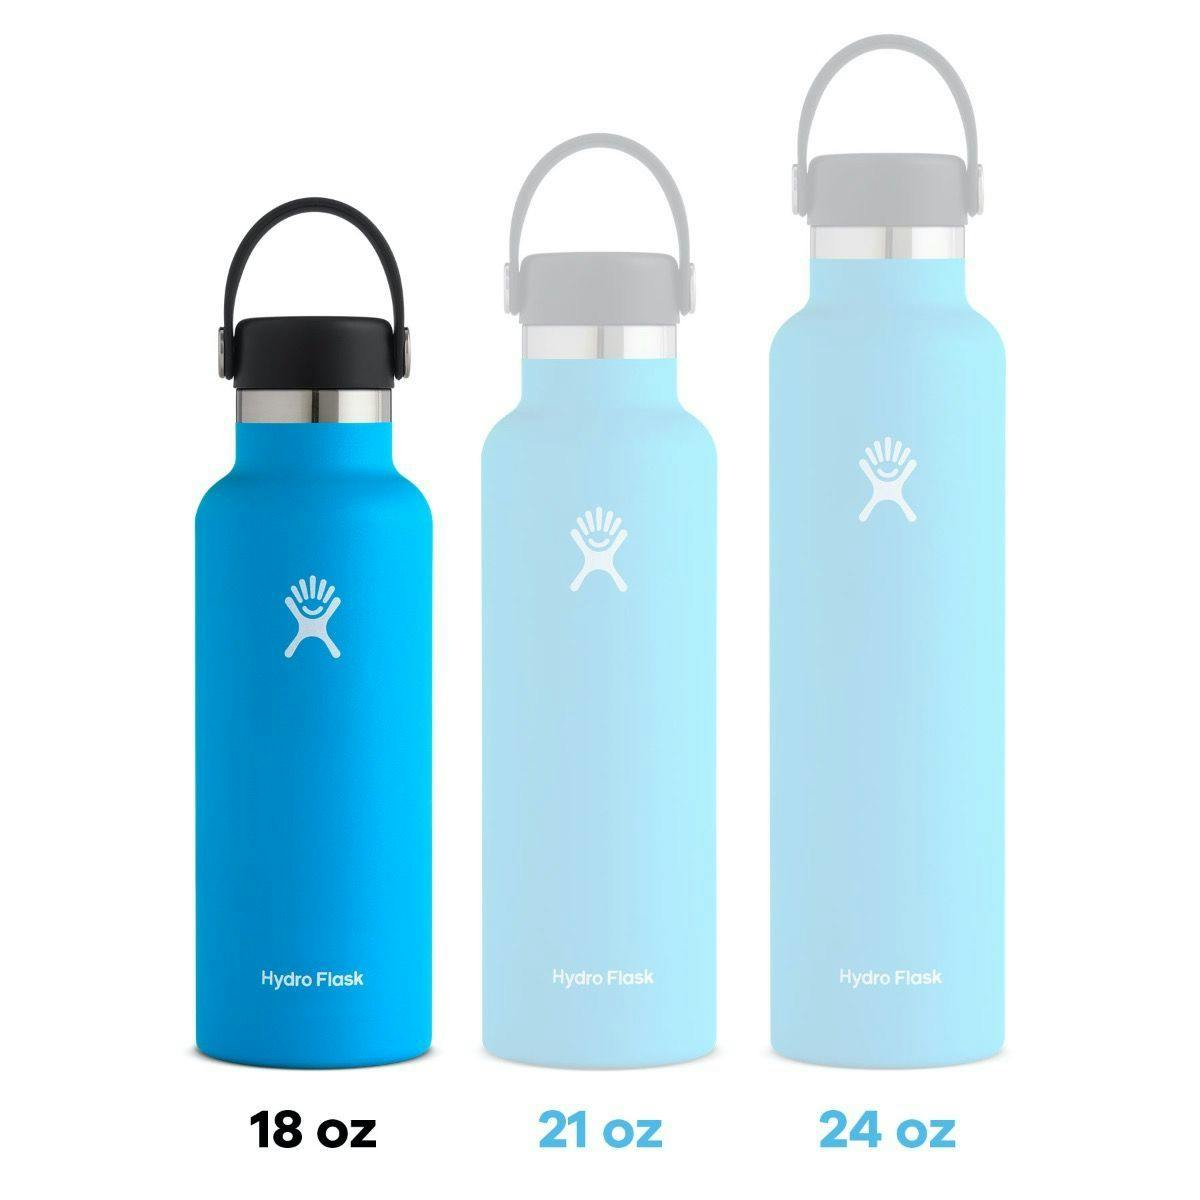 18 oz Standard Mouth: 18 oz Water Bottle